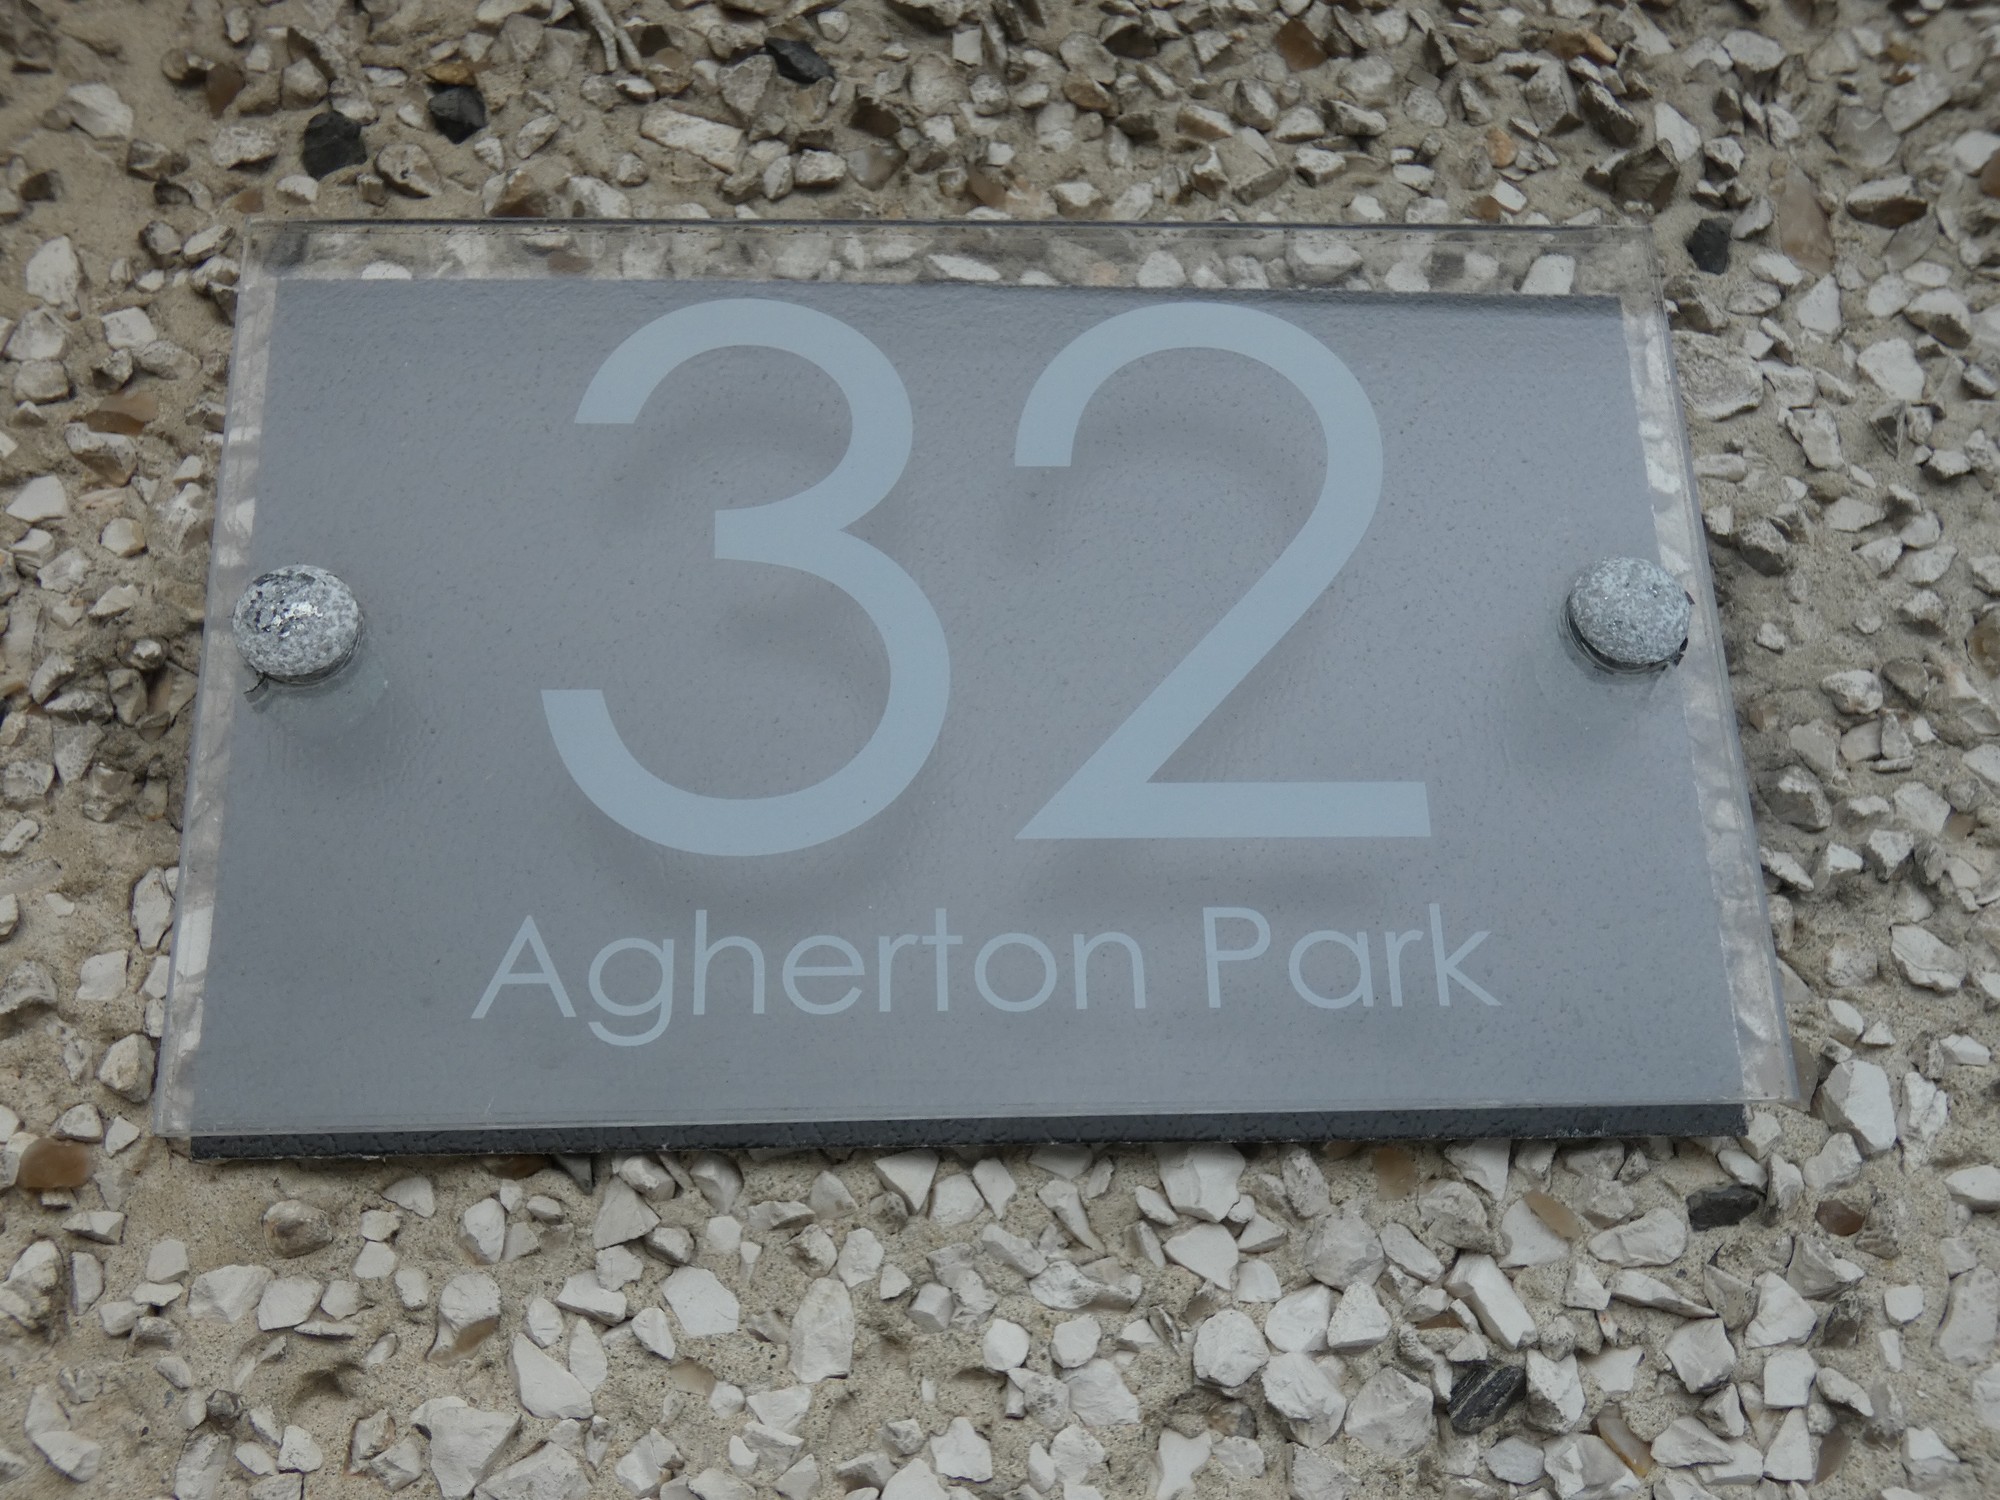 32 Agherton Park